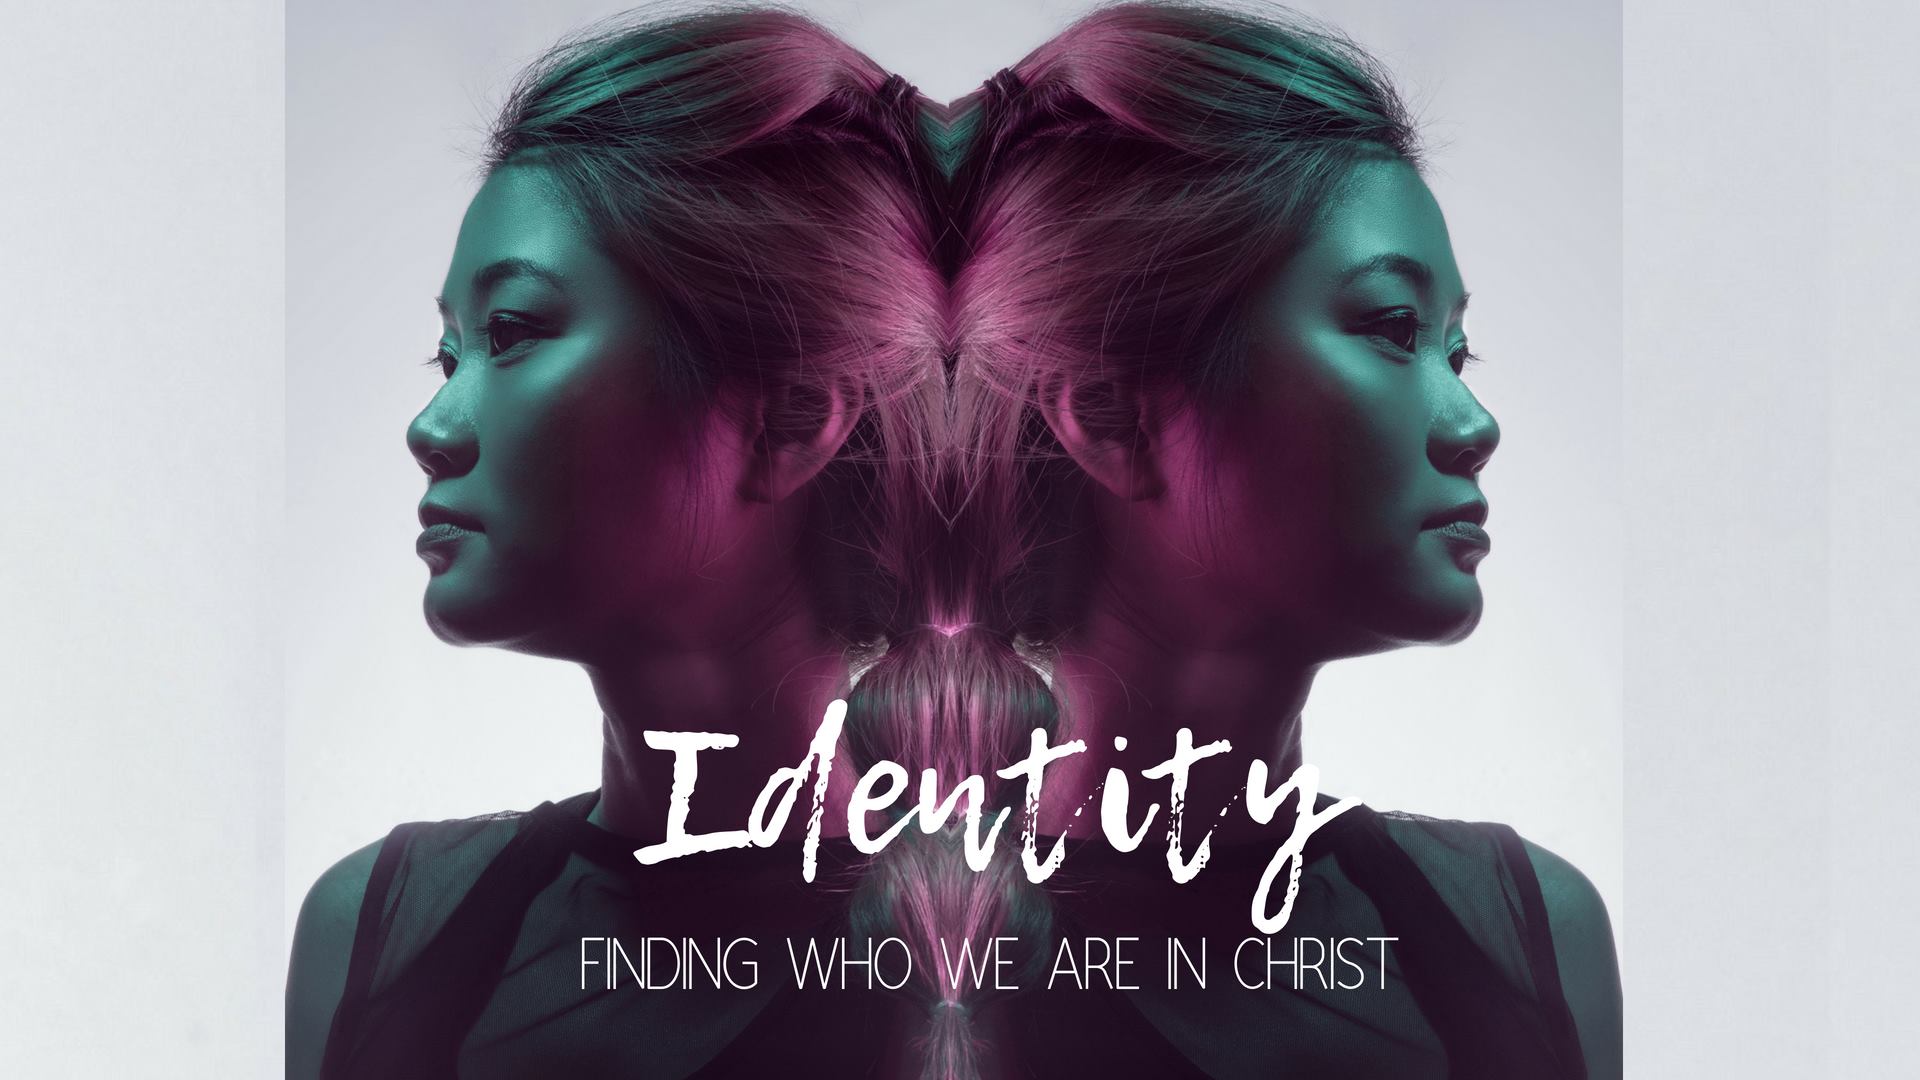 Identity: I am a Child of God